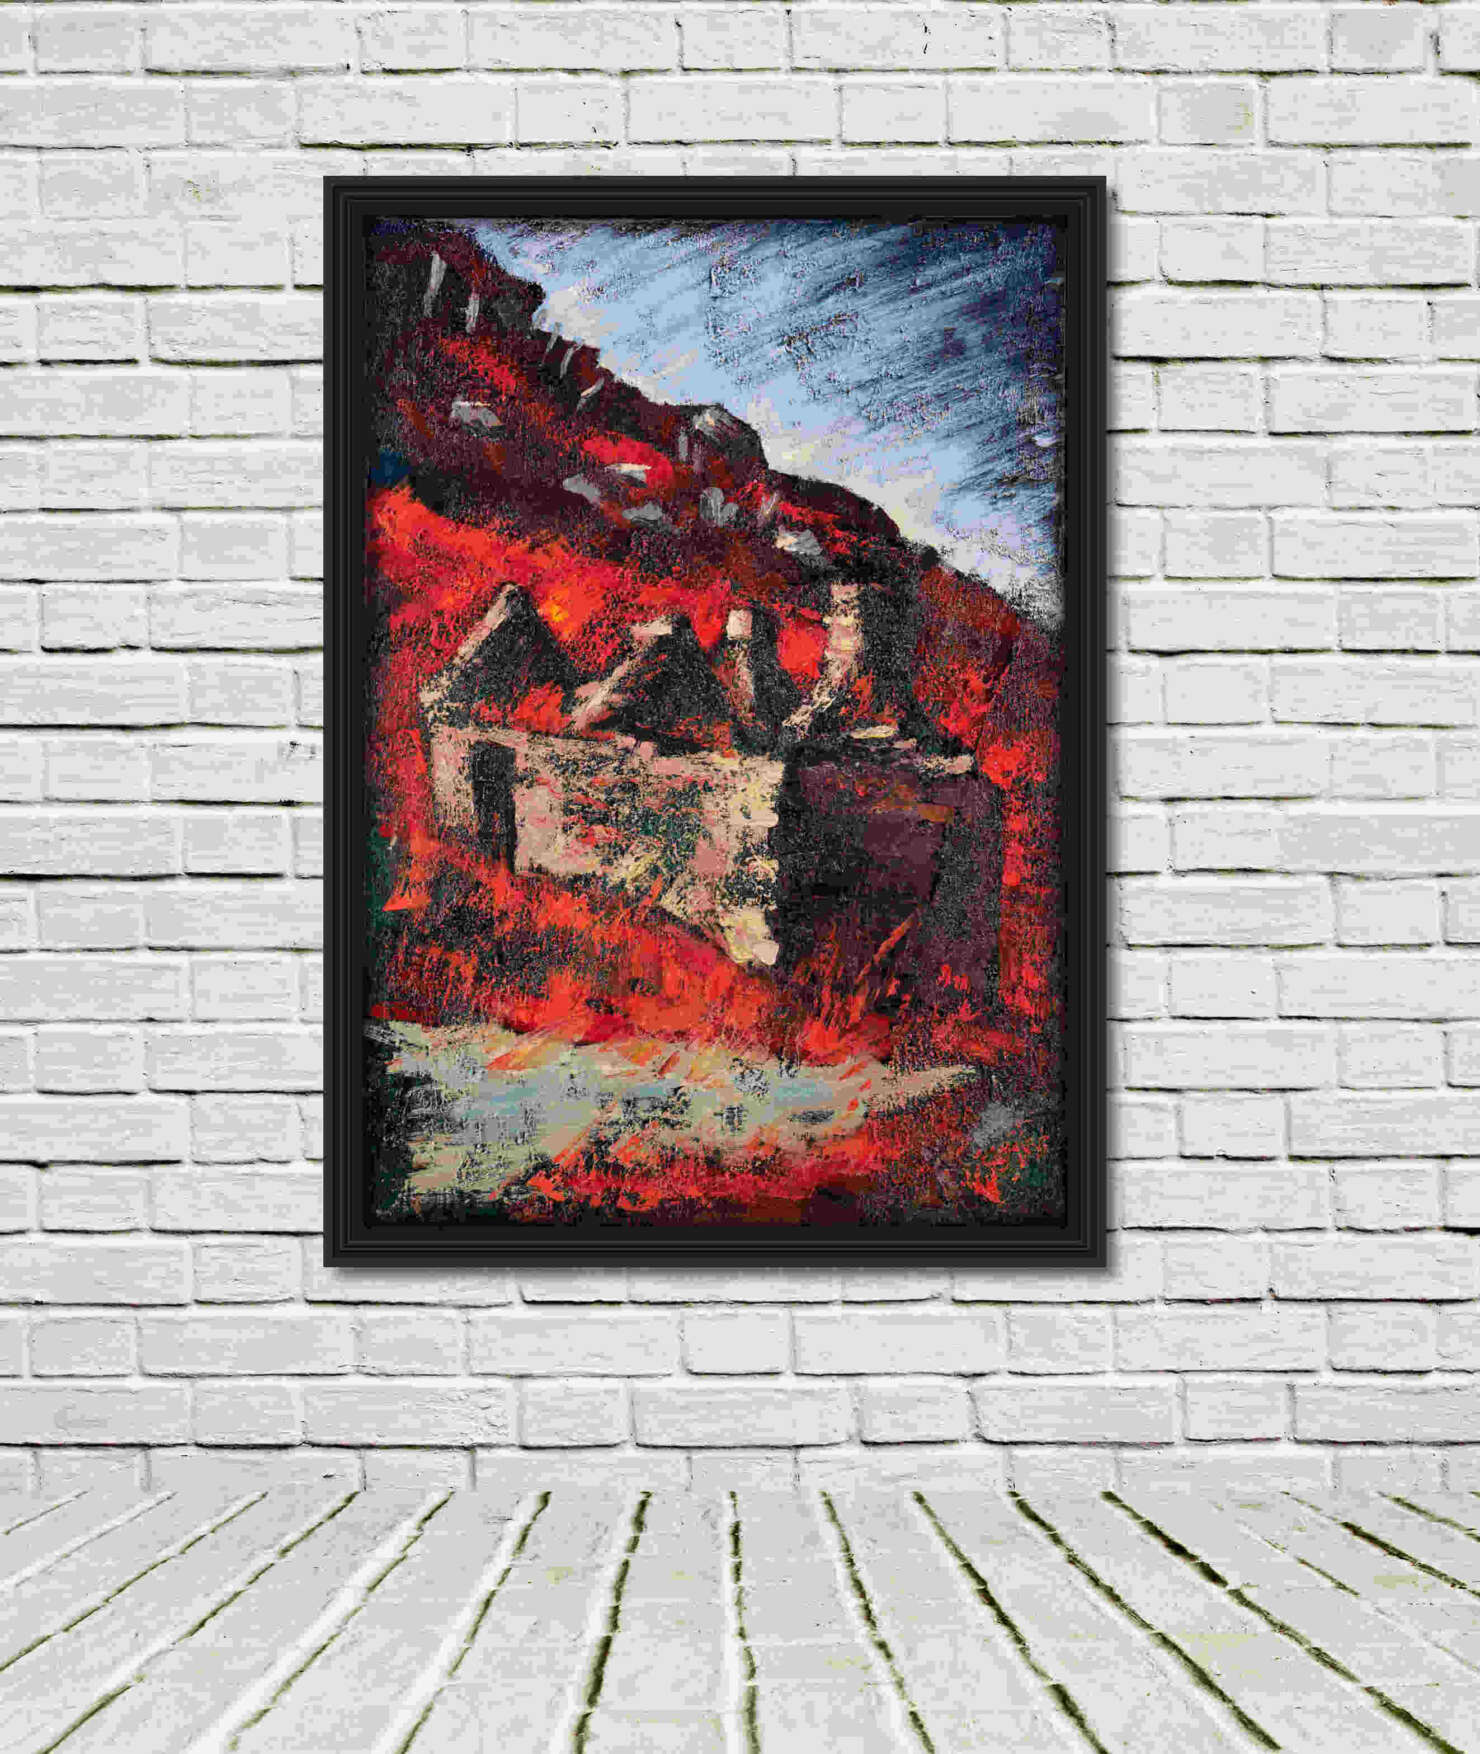 artist rod coyne's landscape "Famine Village Ruins, East" is shown here, in a black frame in a white room.